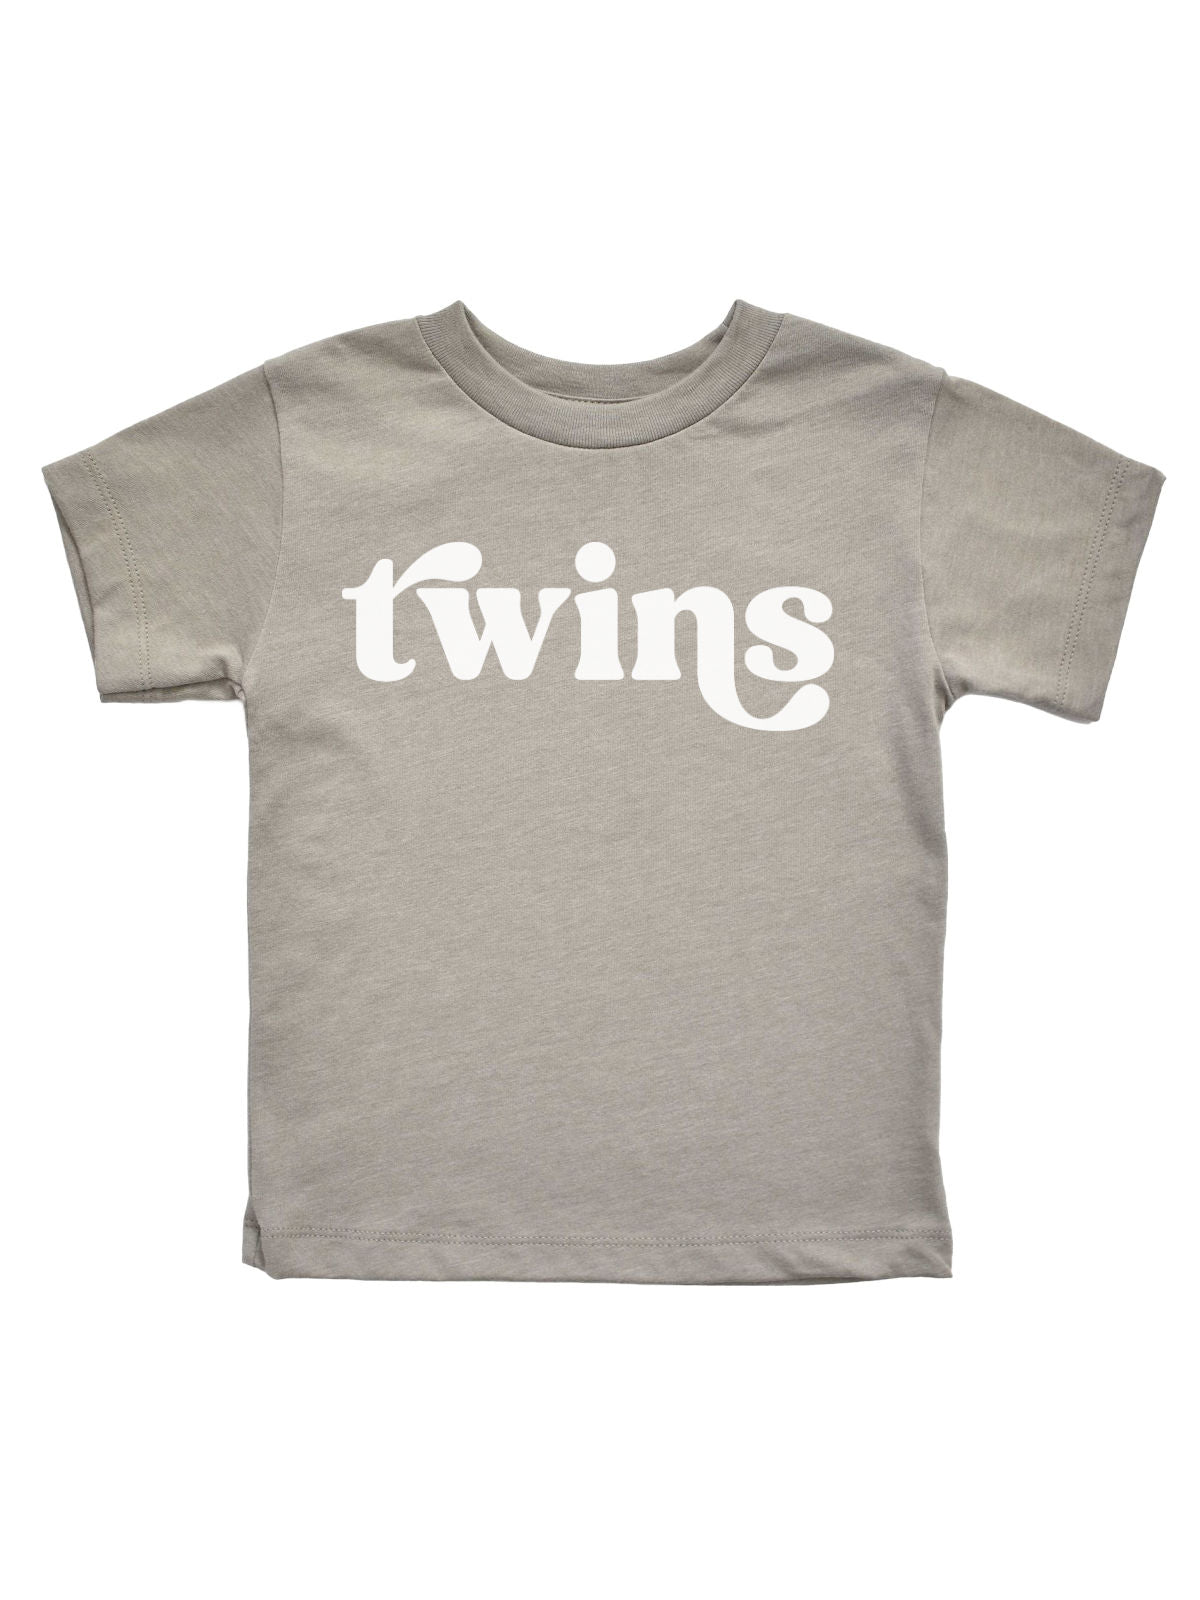 Twins Kids Shirt in Stone